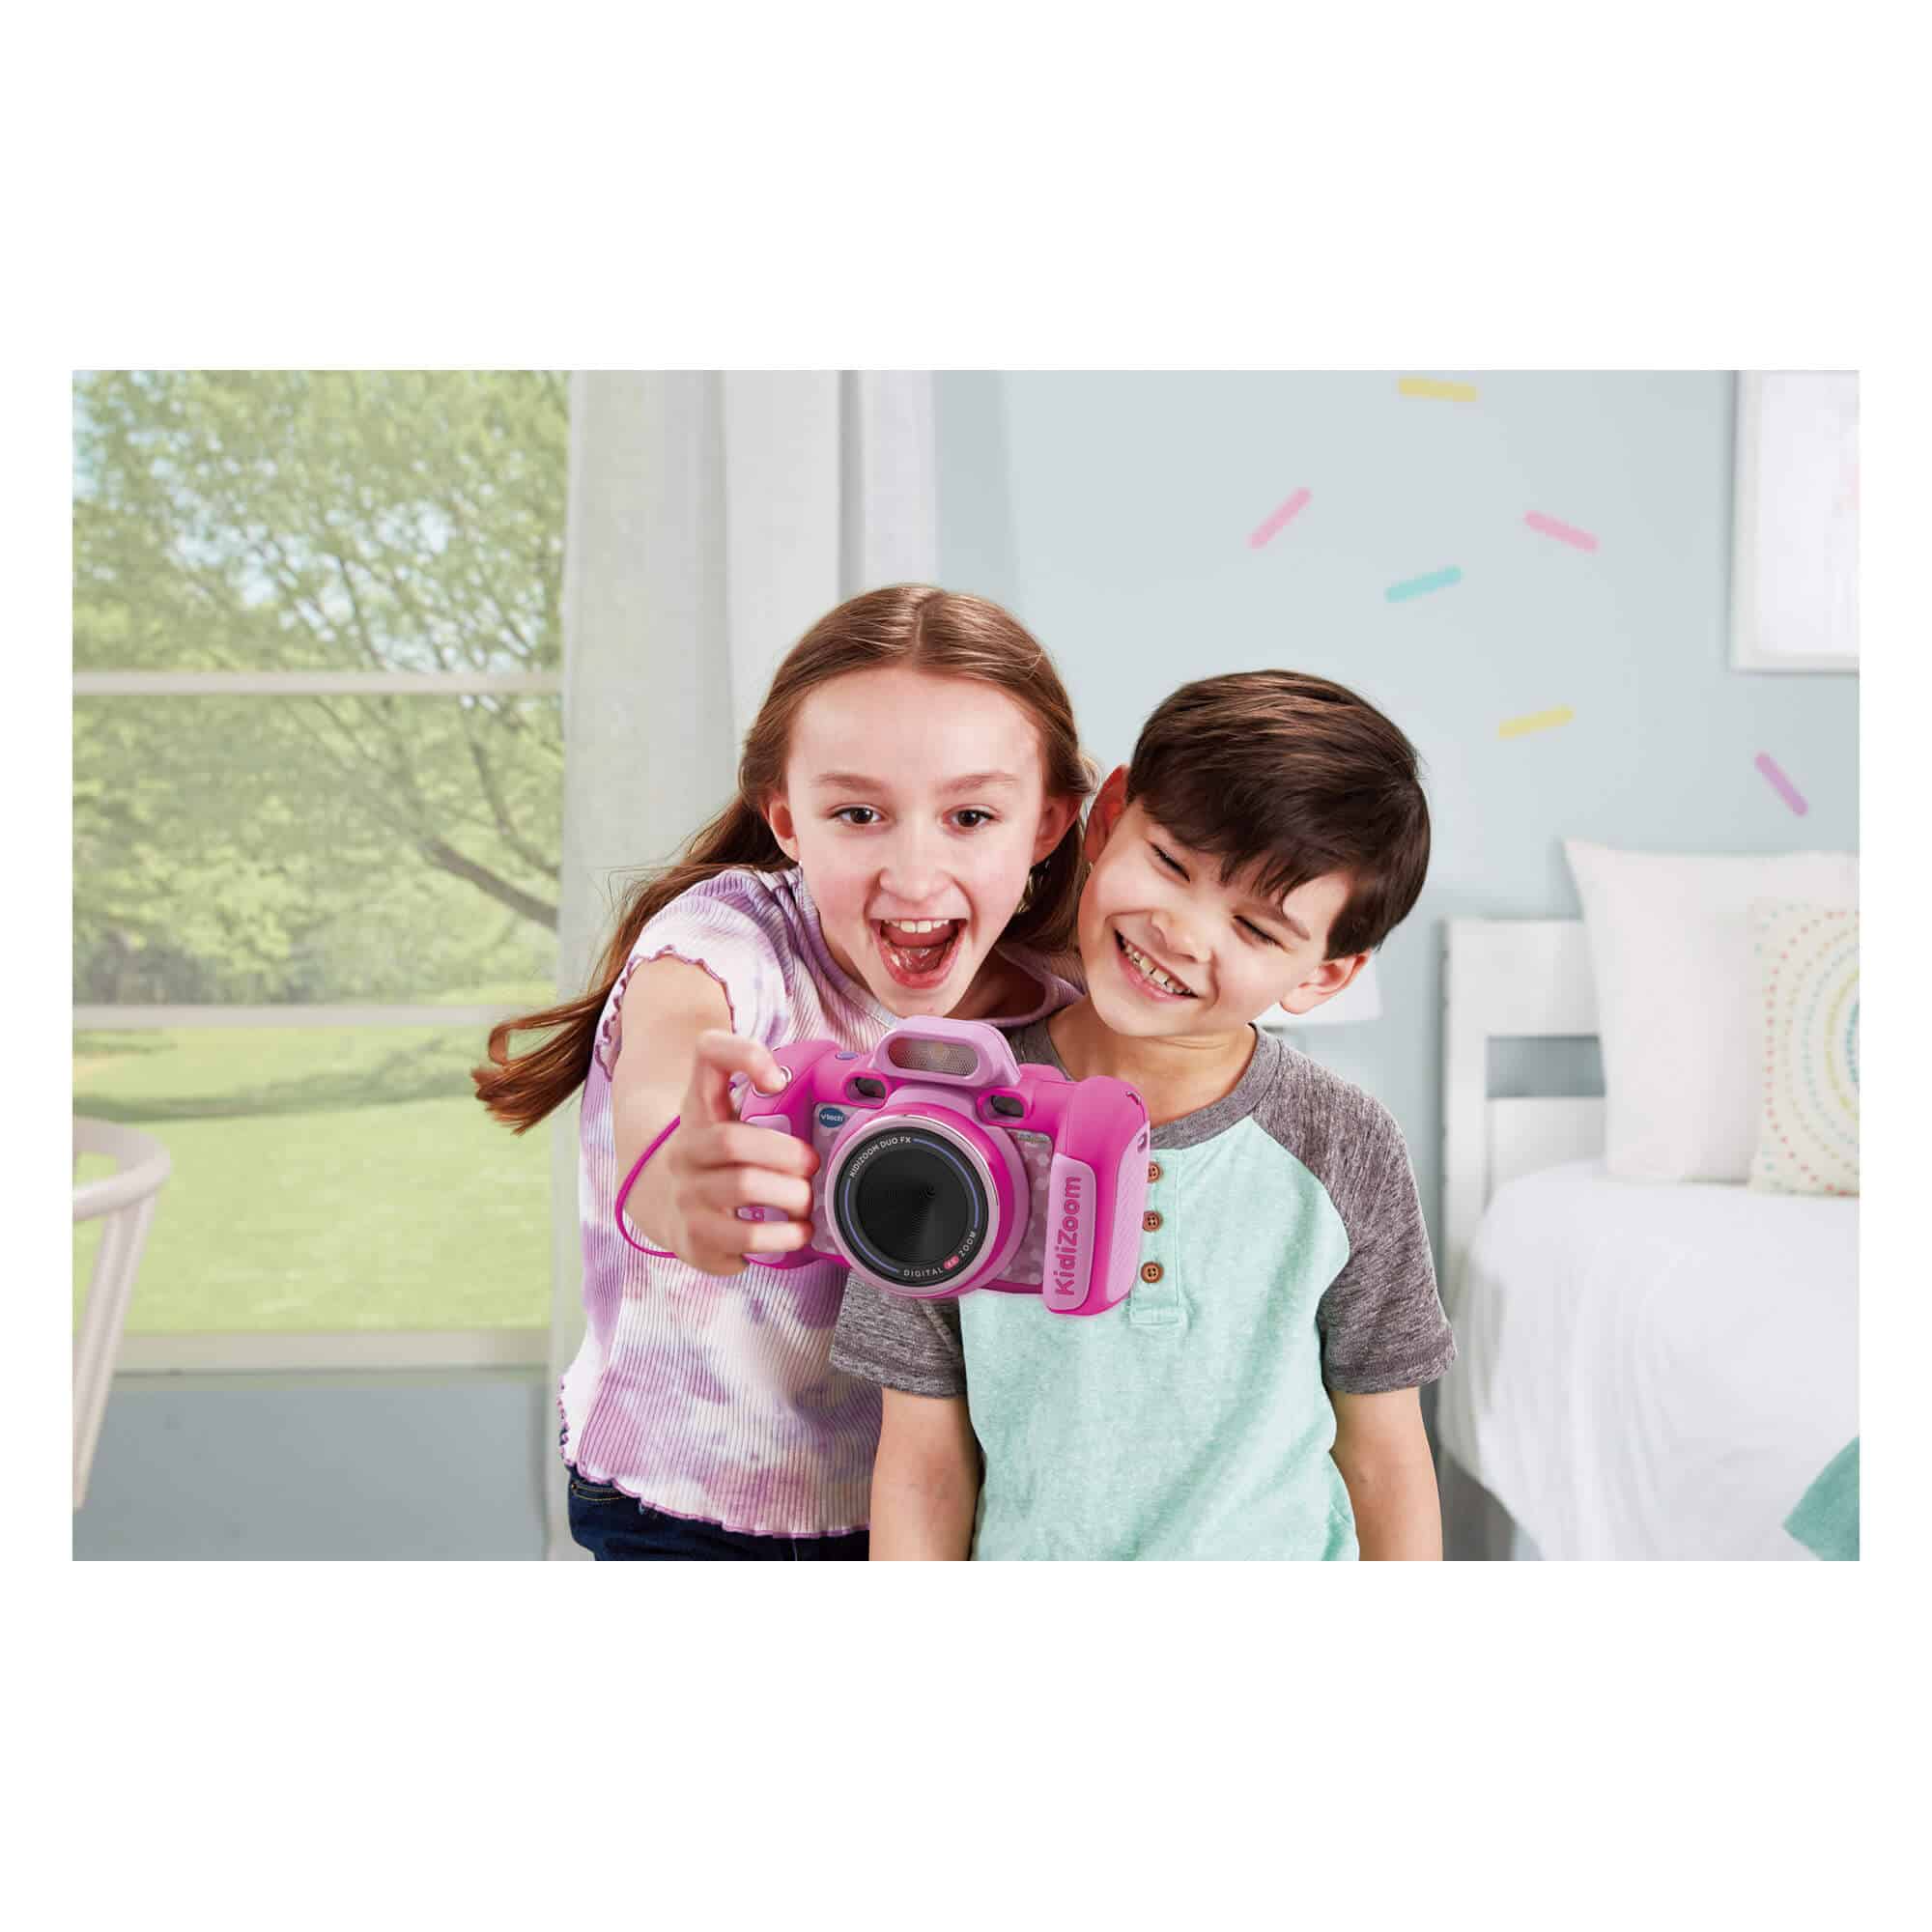 VTech - KidiZoom Duo FX Pink, Children's Digital Camera, Photo